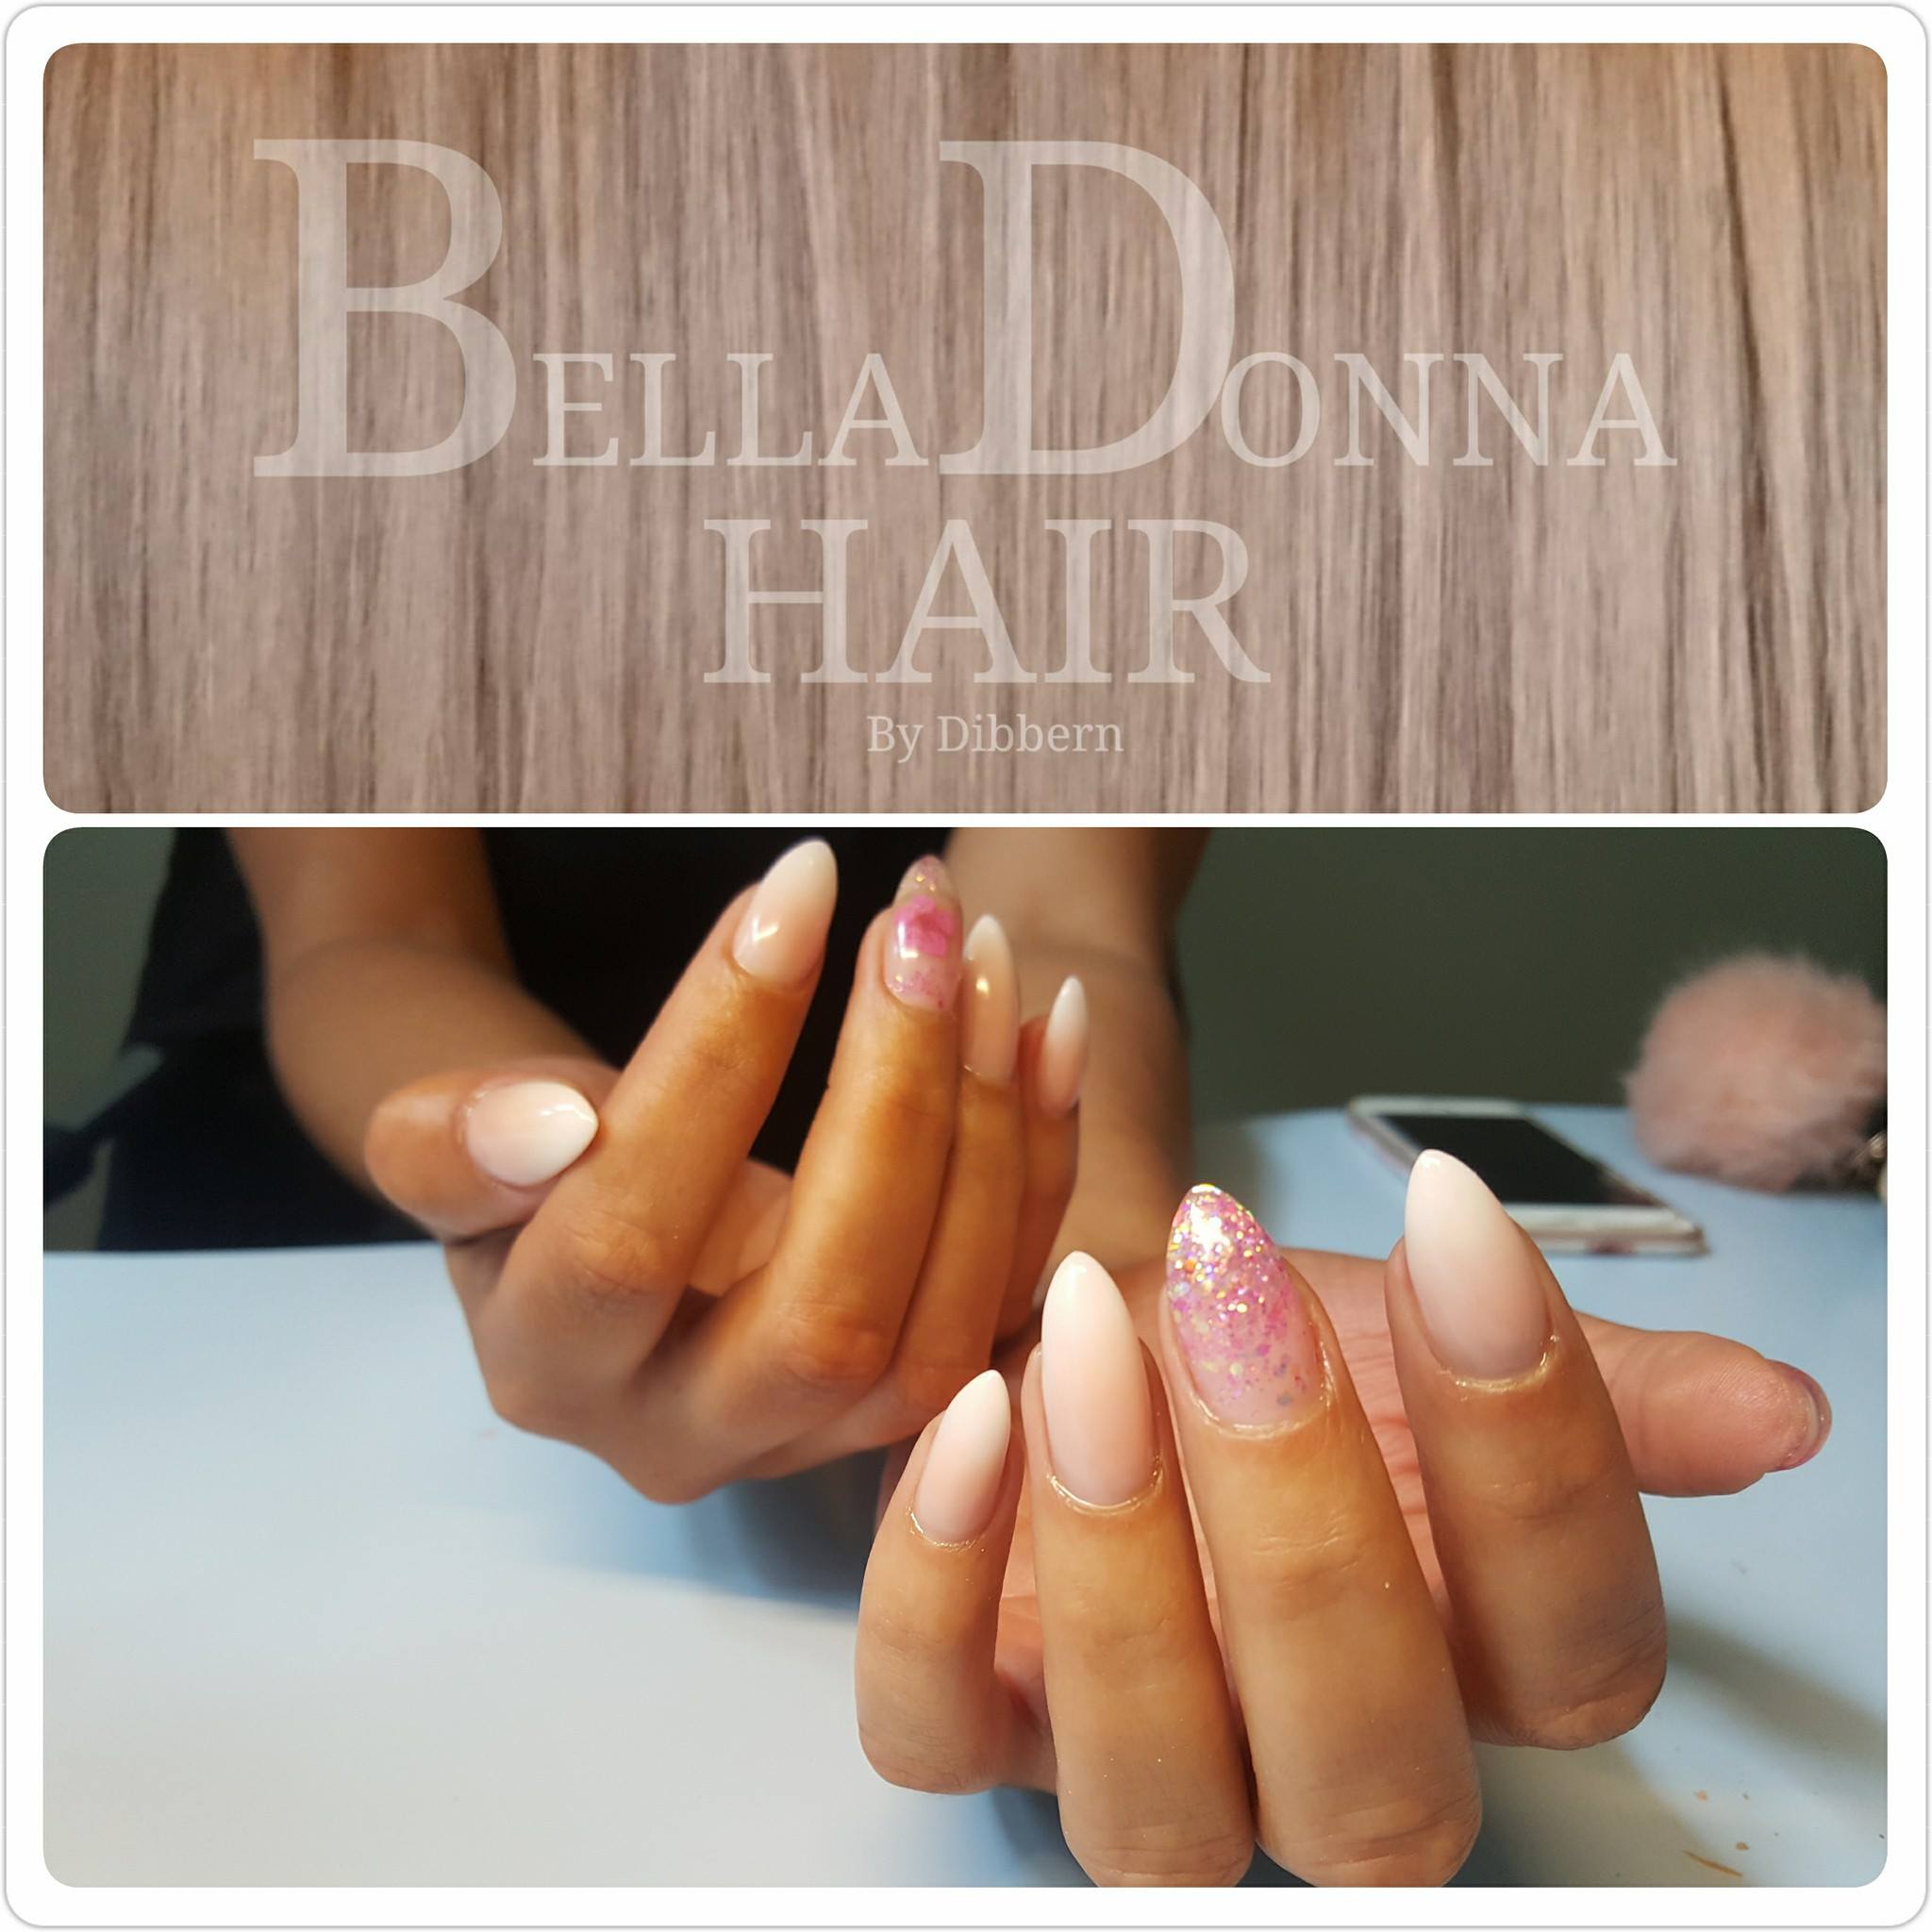 Perforering Autonom spand Pleje af opbyggede negle — BellaDonna-Hair